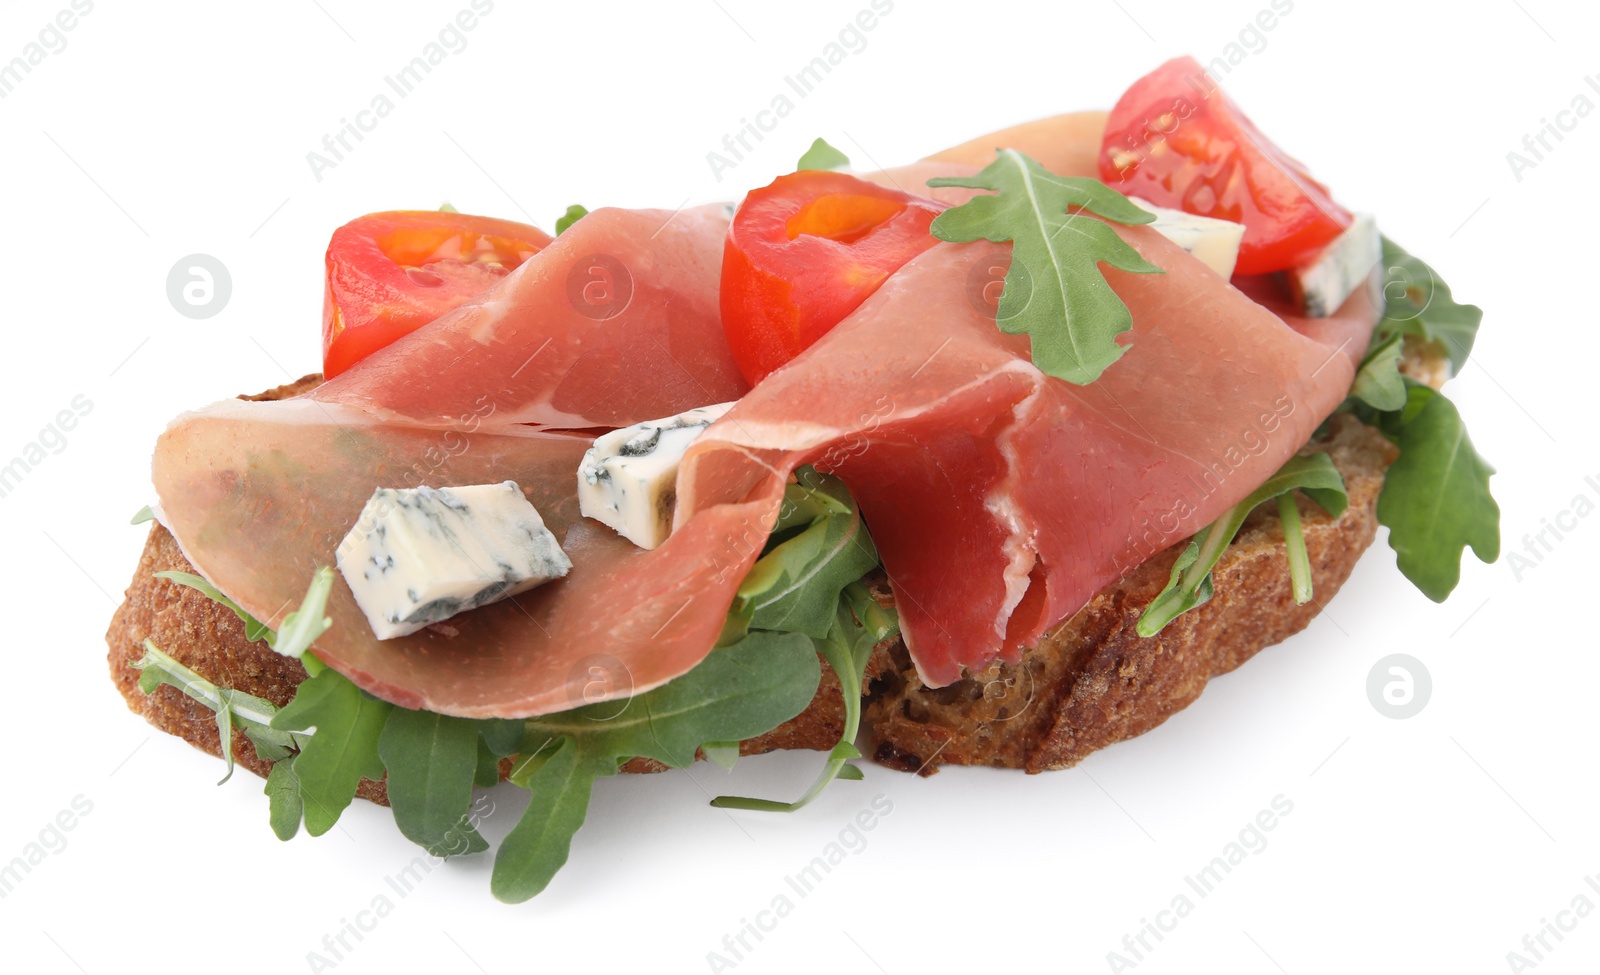 Photo of Tasty bruschetta with prosciutto, arugula, cheese and tomato on white background